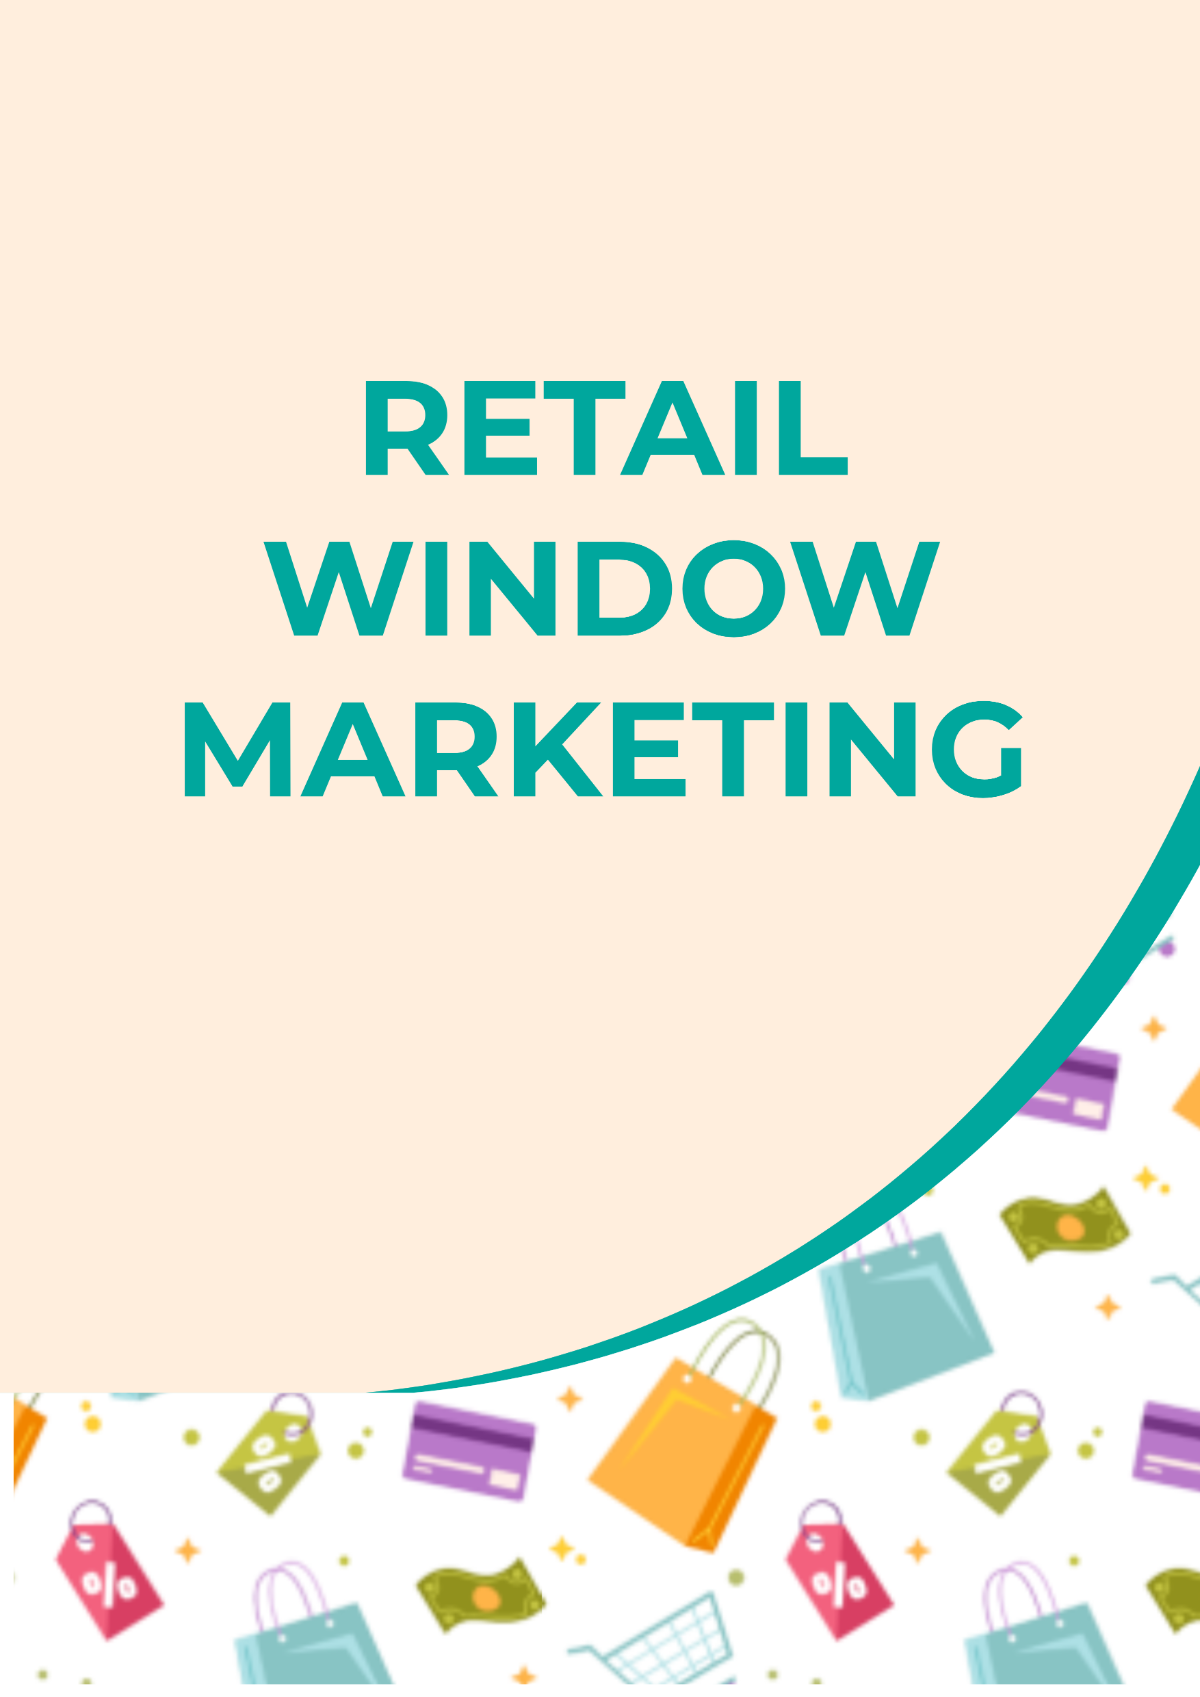 Retail Window Marketing Sign Template